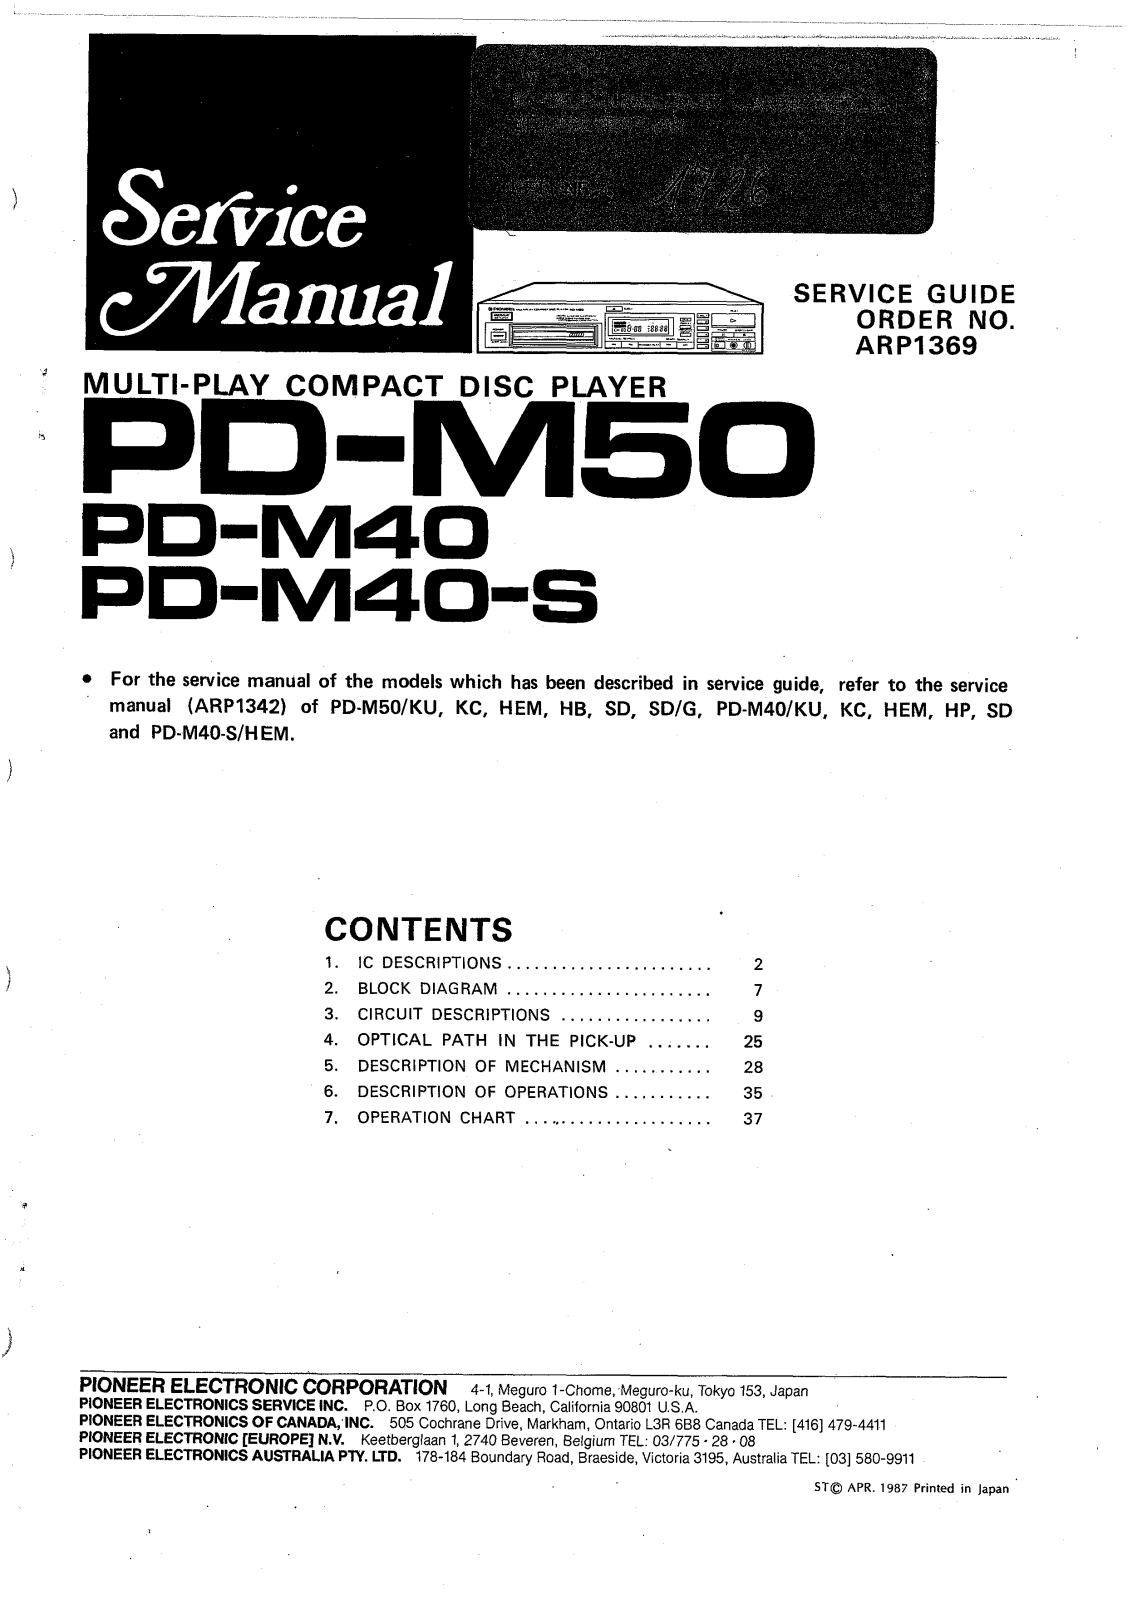 Pioneer PD-M50, PD-M40, PD-M40-S Service manual